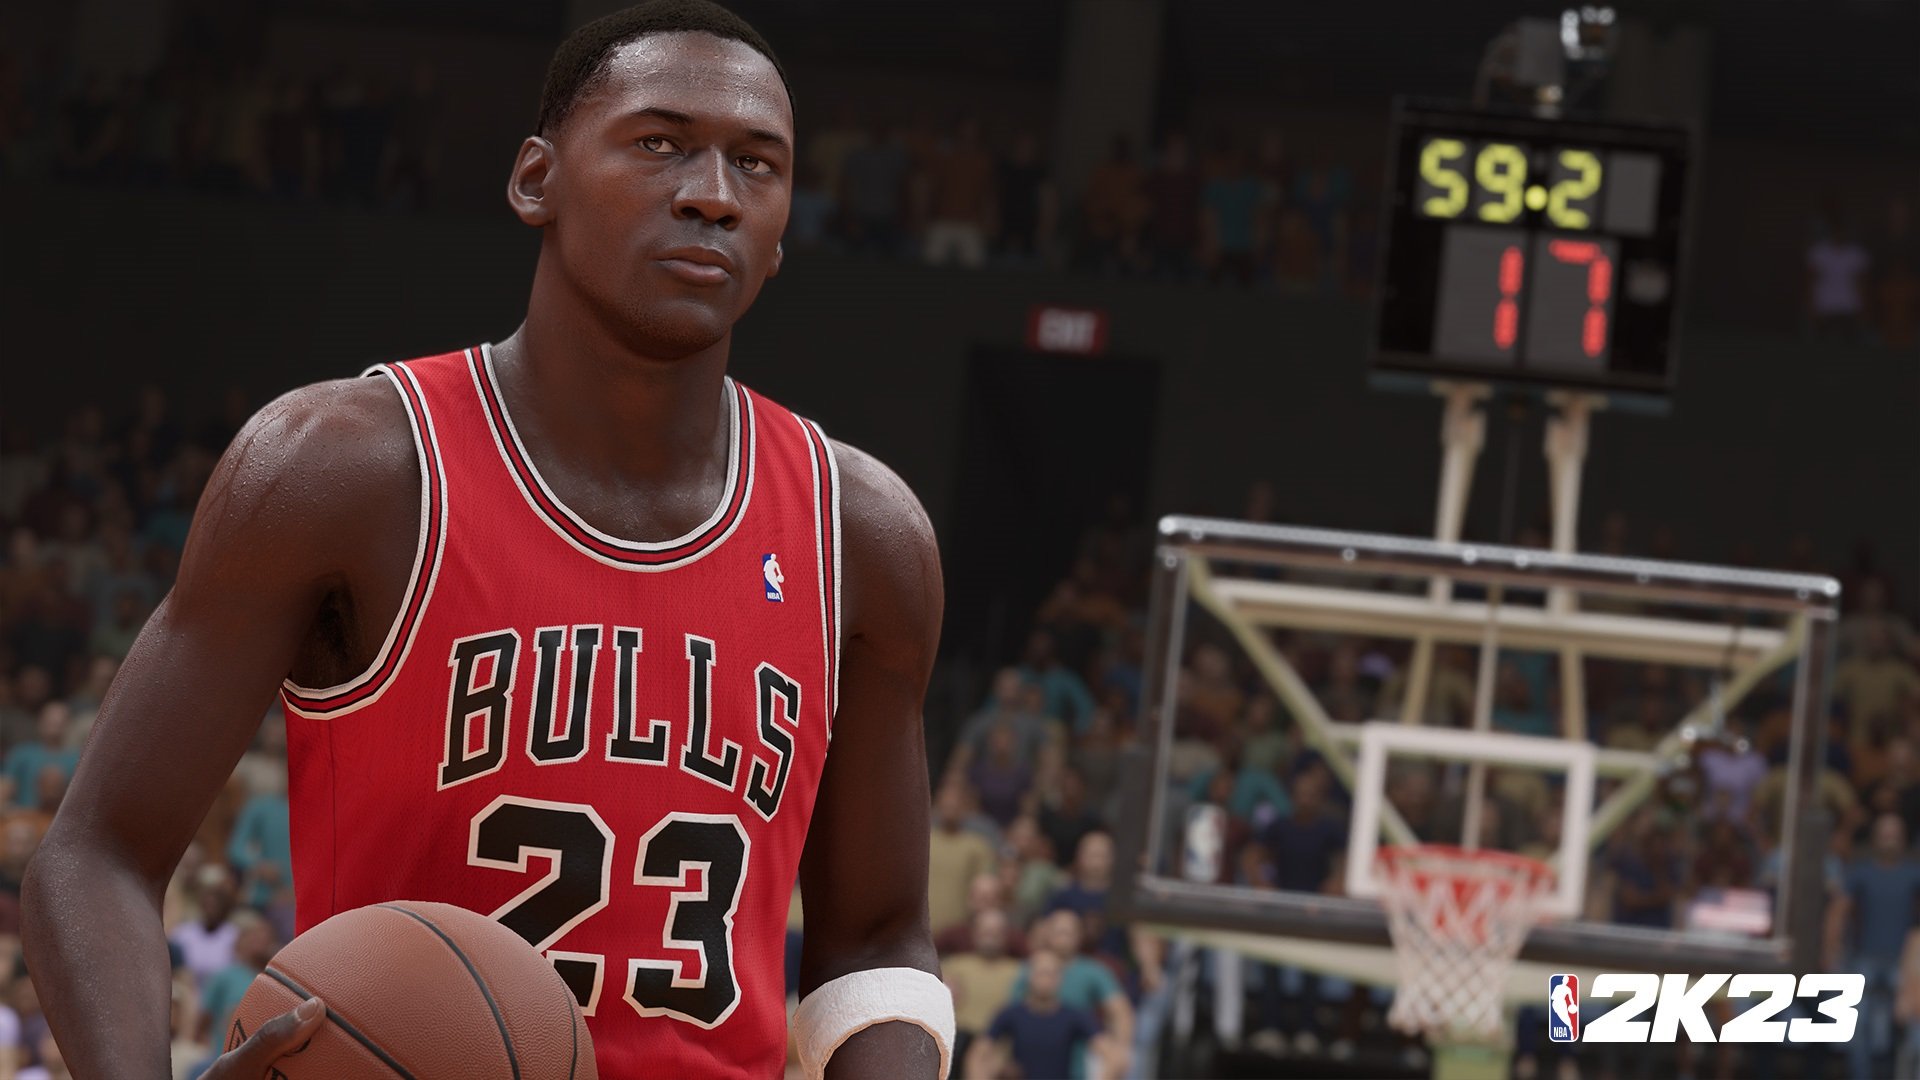 Watch NBA 2K16's 'Play Now Online' Mode Trailer 